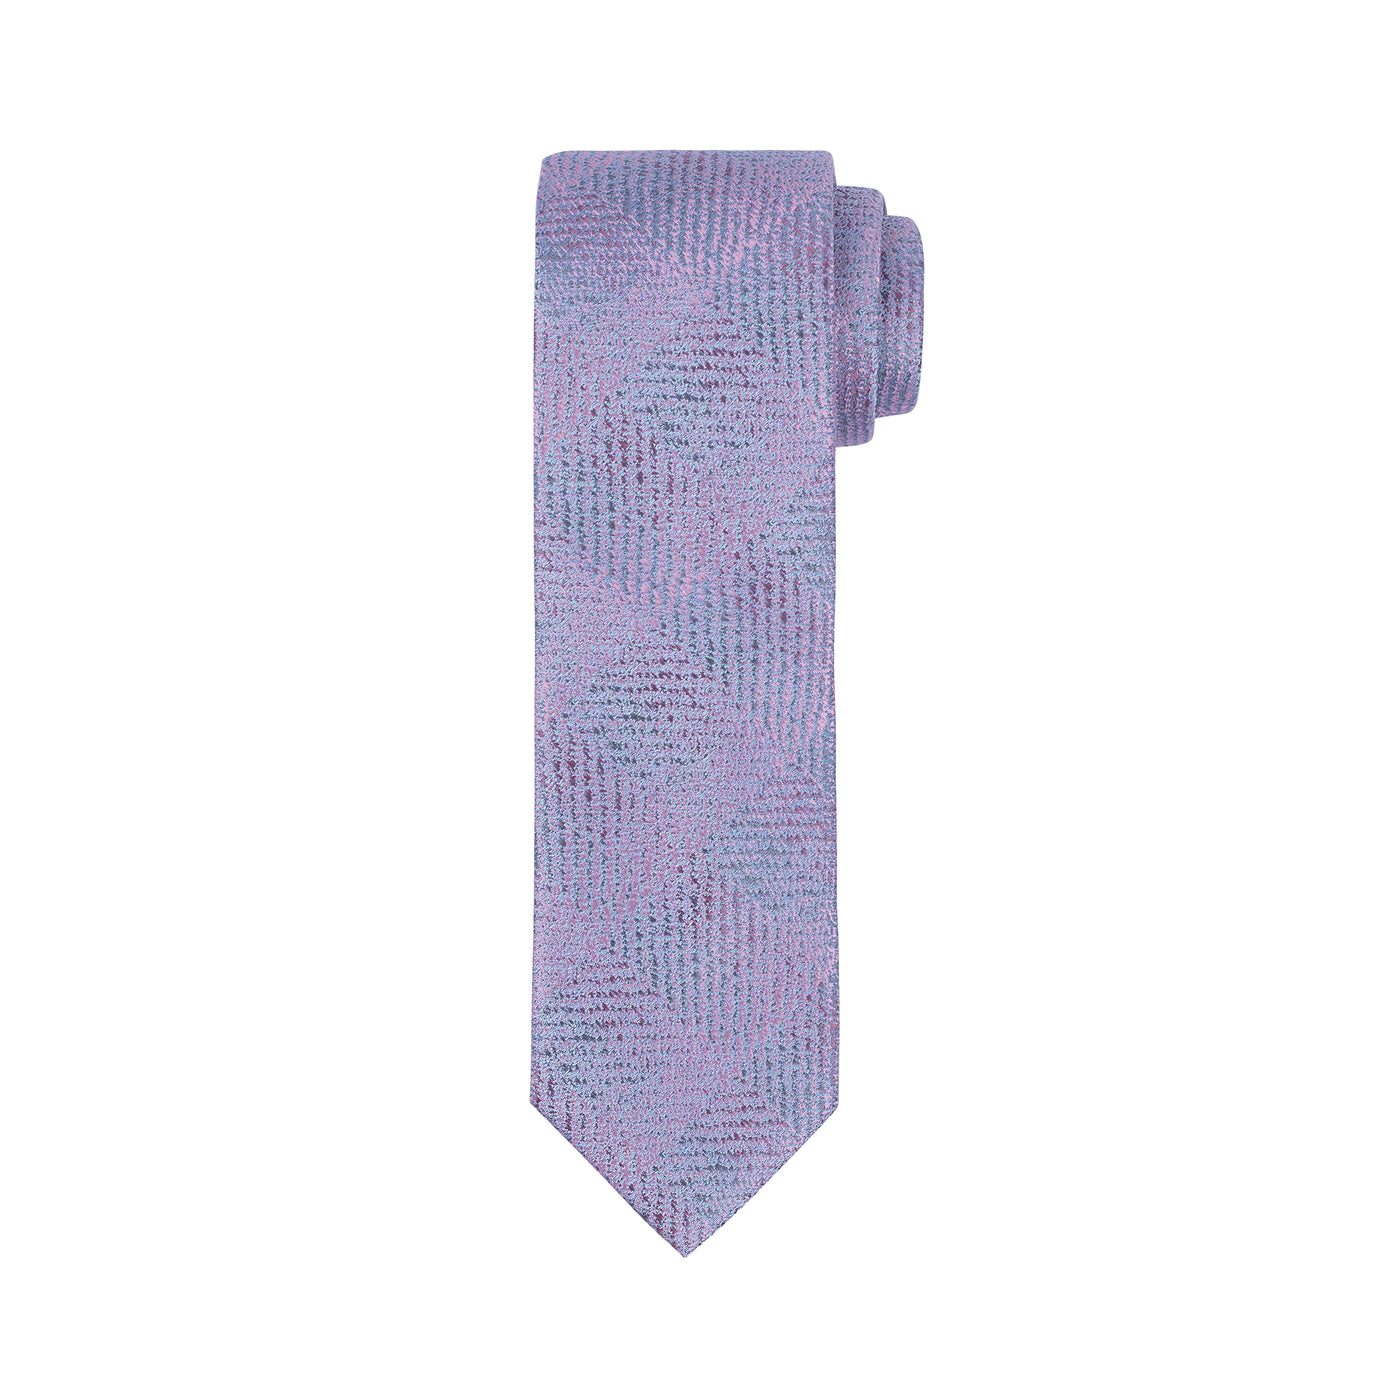 Tone Tie in Lavender